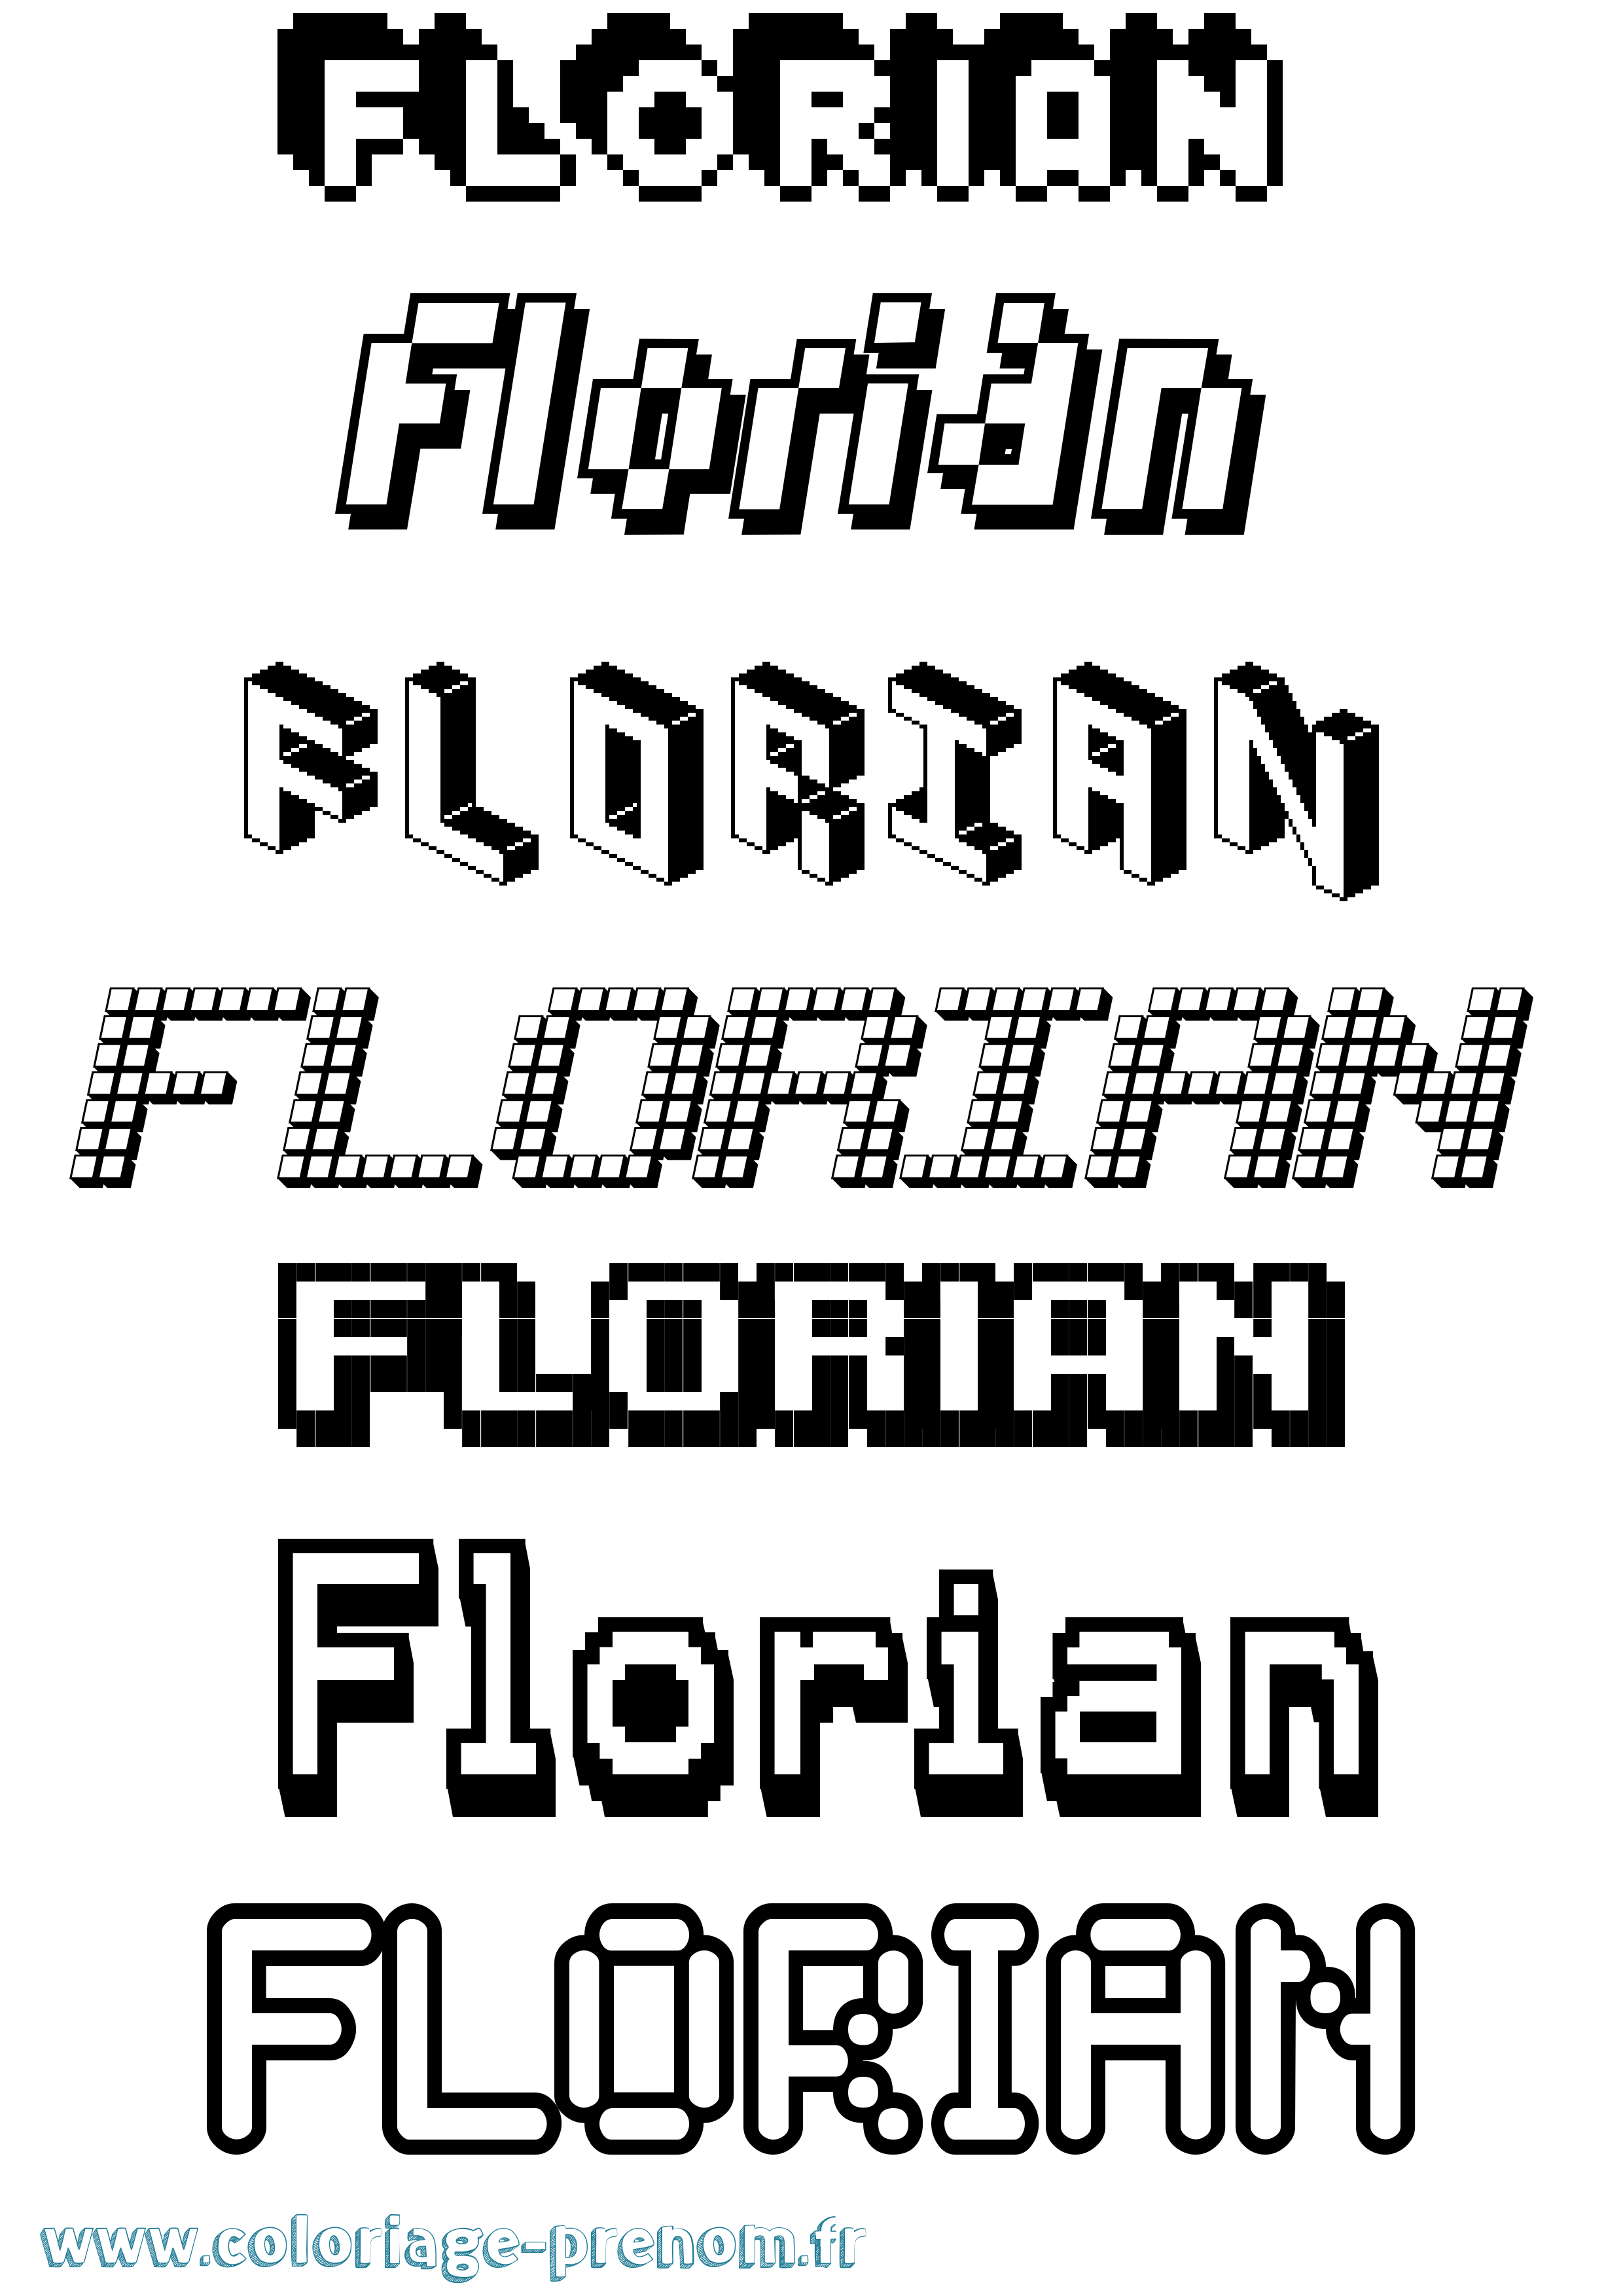 Coloriage prénom Florian Pixel